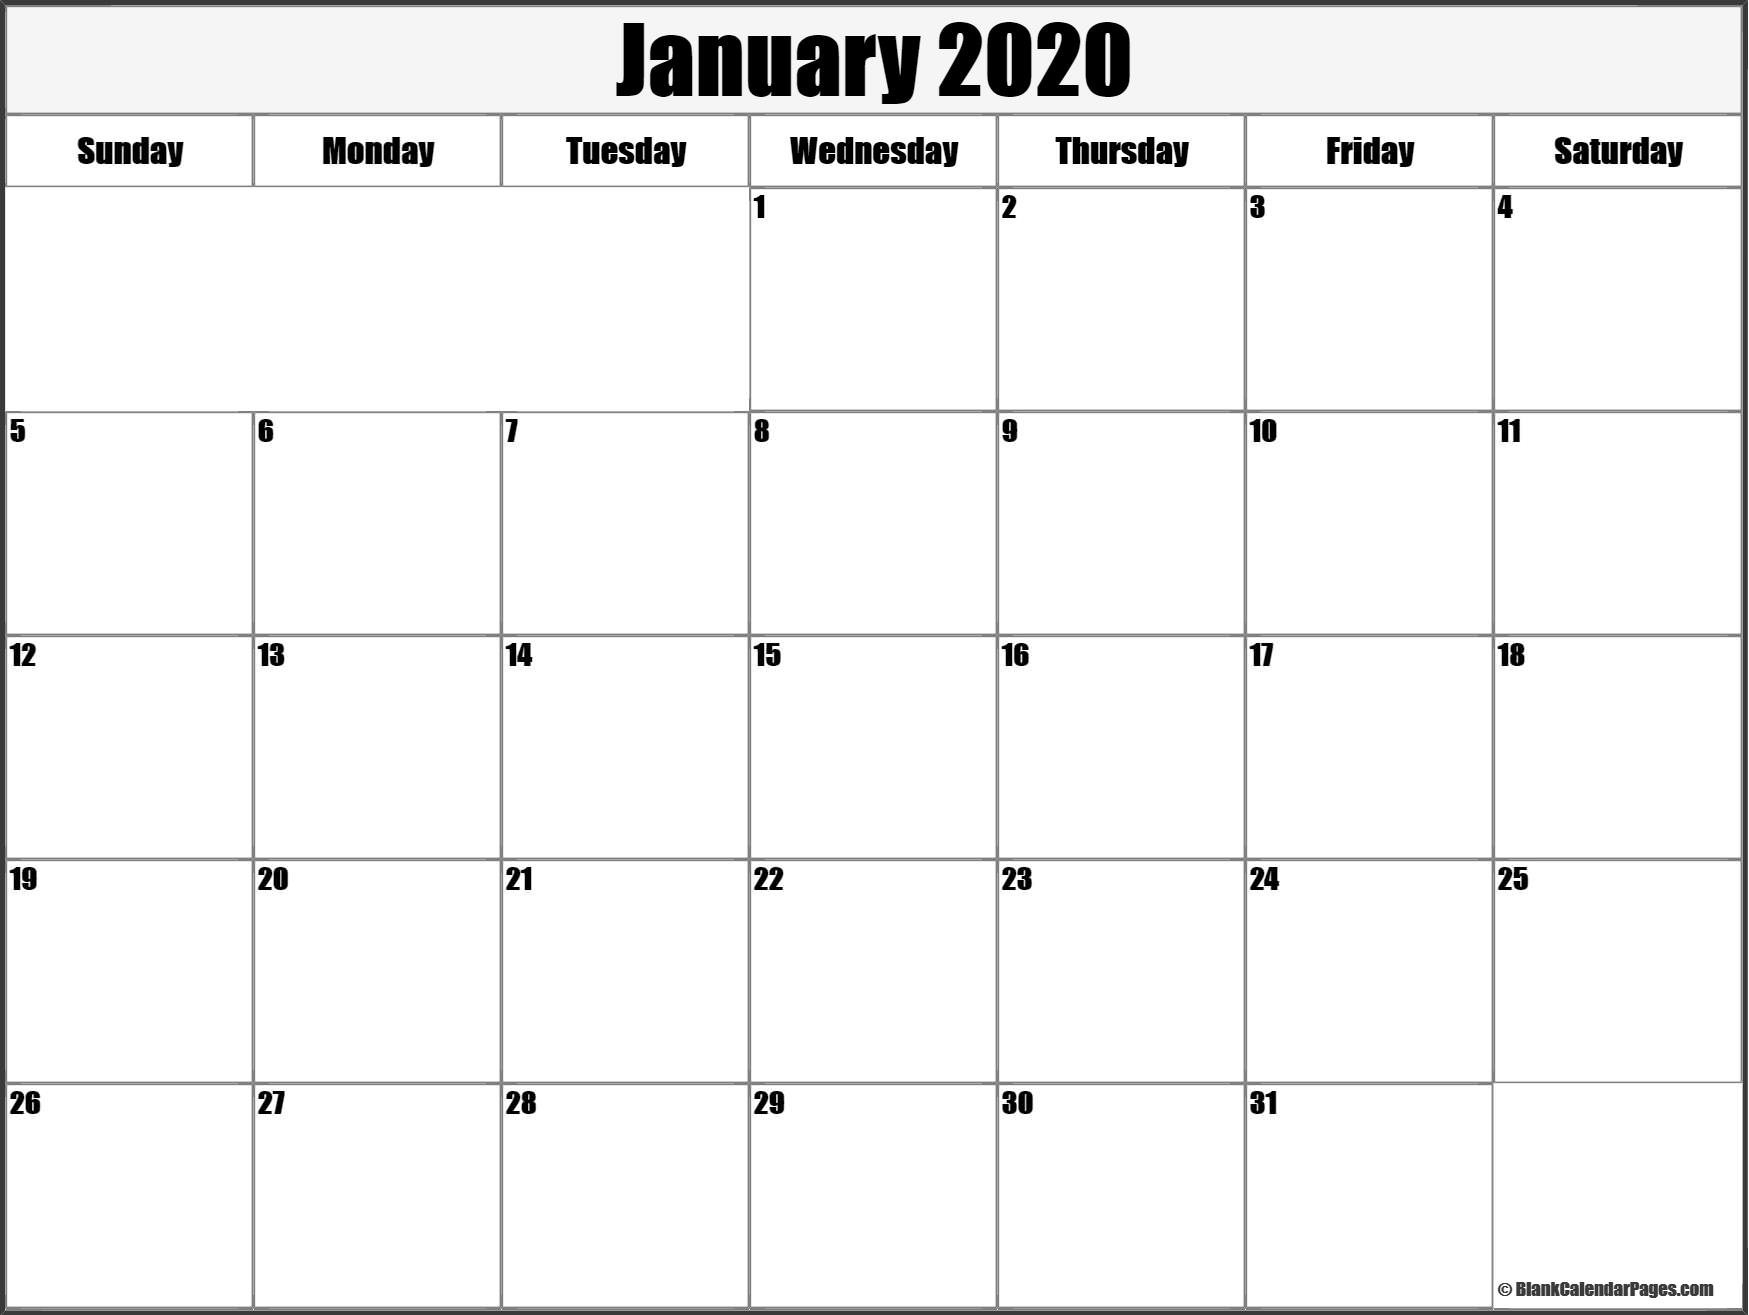 Free January 2020 Calendar Printable January 2020 Blank Calendar Incredible Free Printable Calendar January 2020